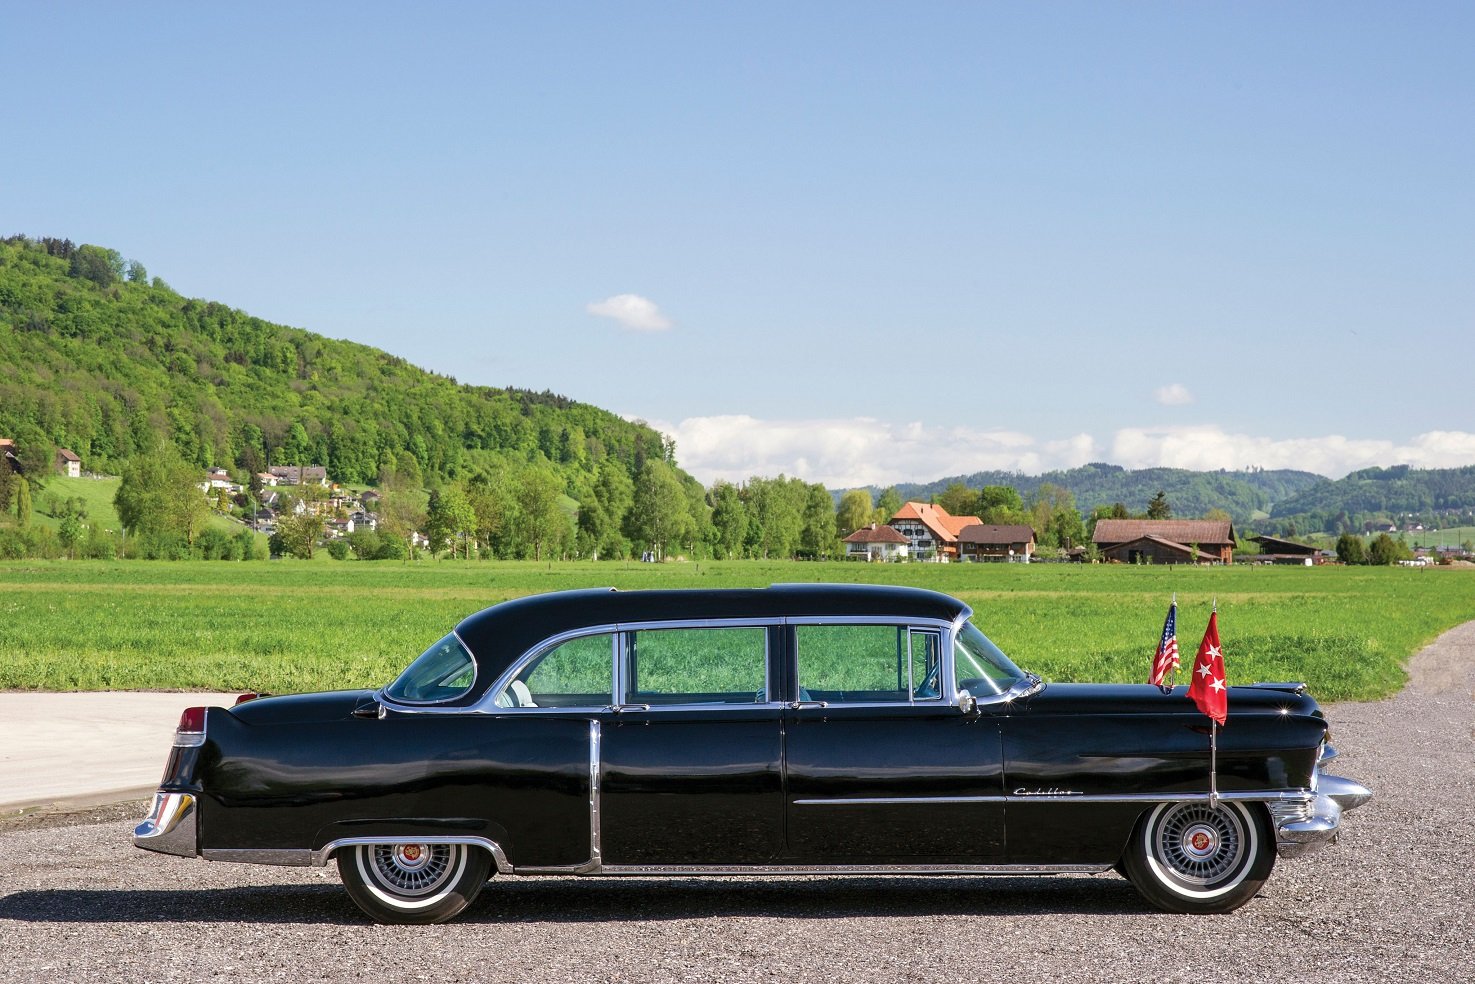 1955, Cadillac, Fleetwood, Seventy five, Black, Presidential, Limousine, Cars, Classic Wallpaper